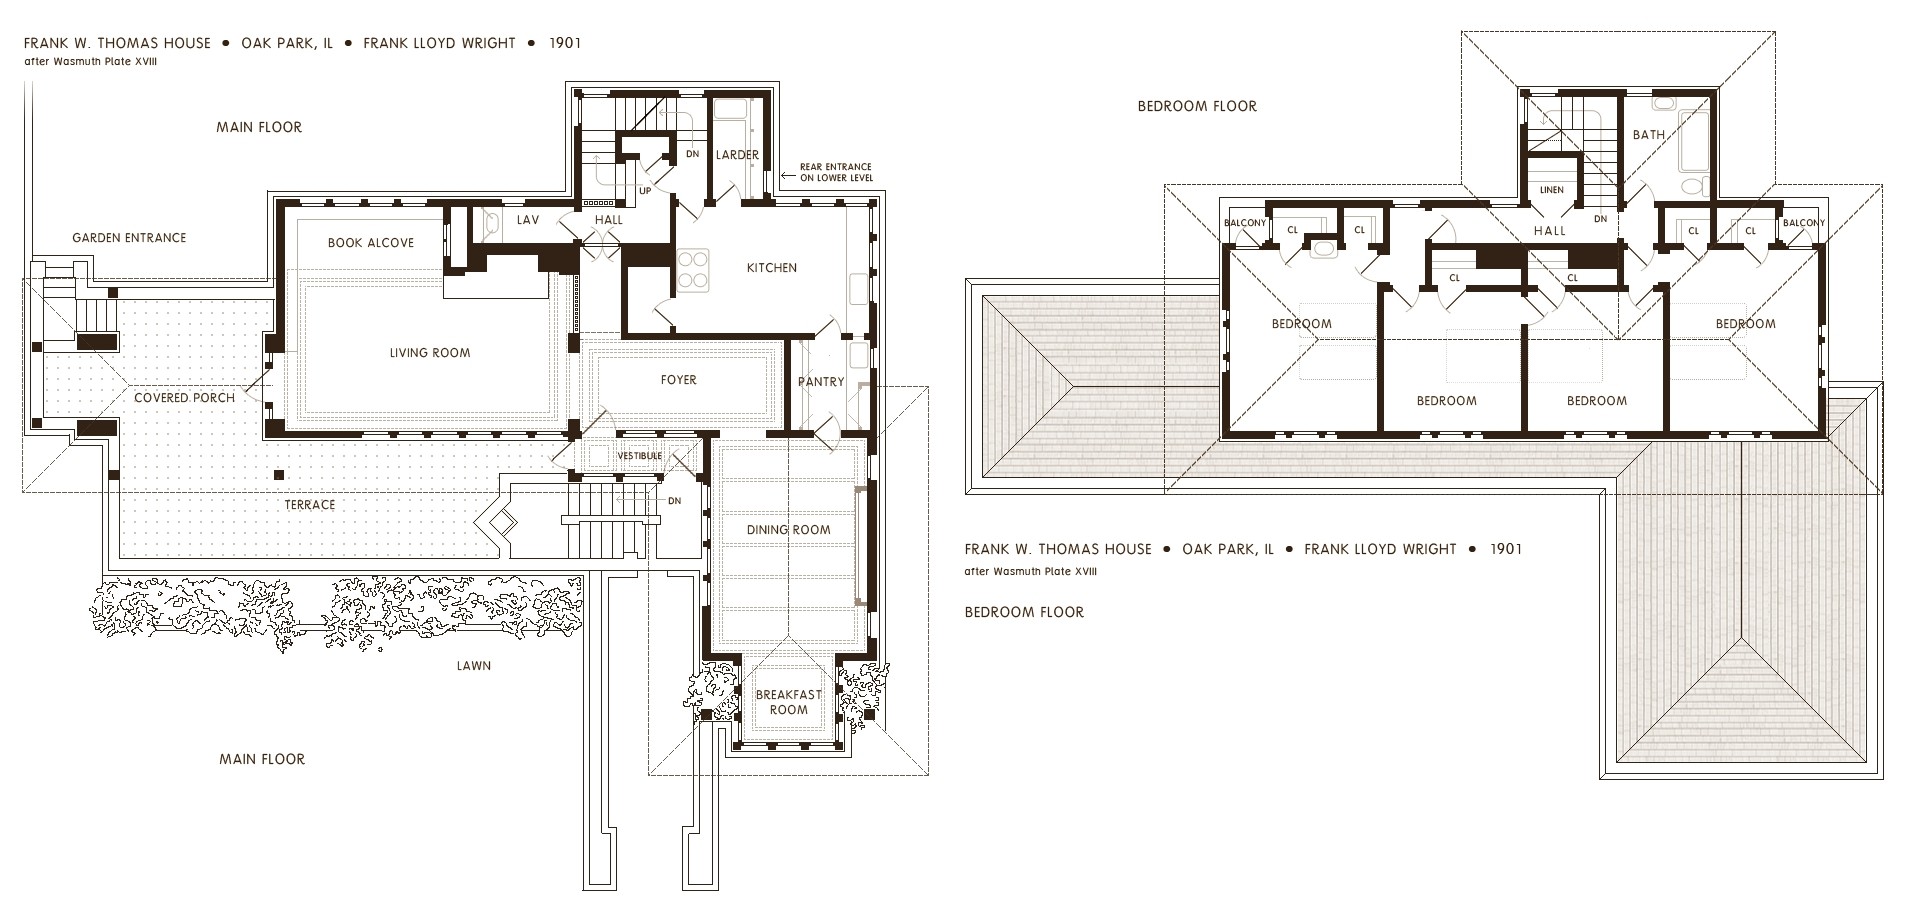 Floor plan of the Frank Thomas House, by Frank Lloyd